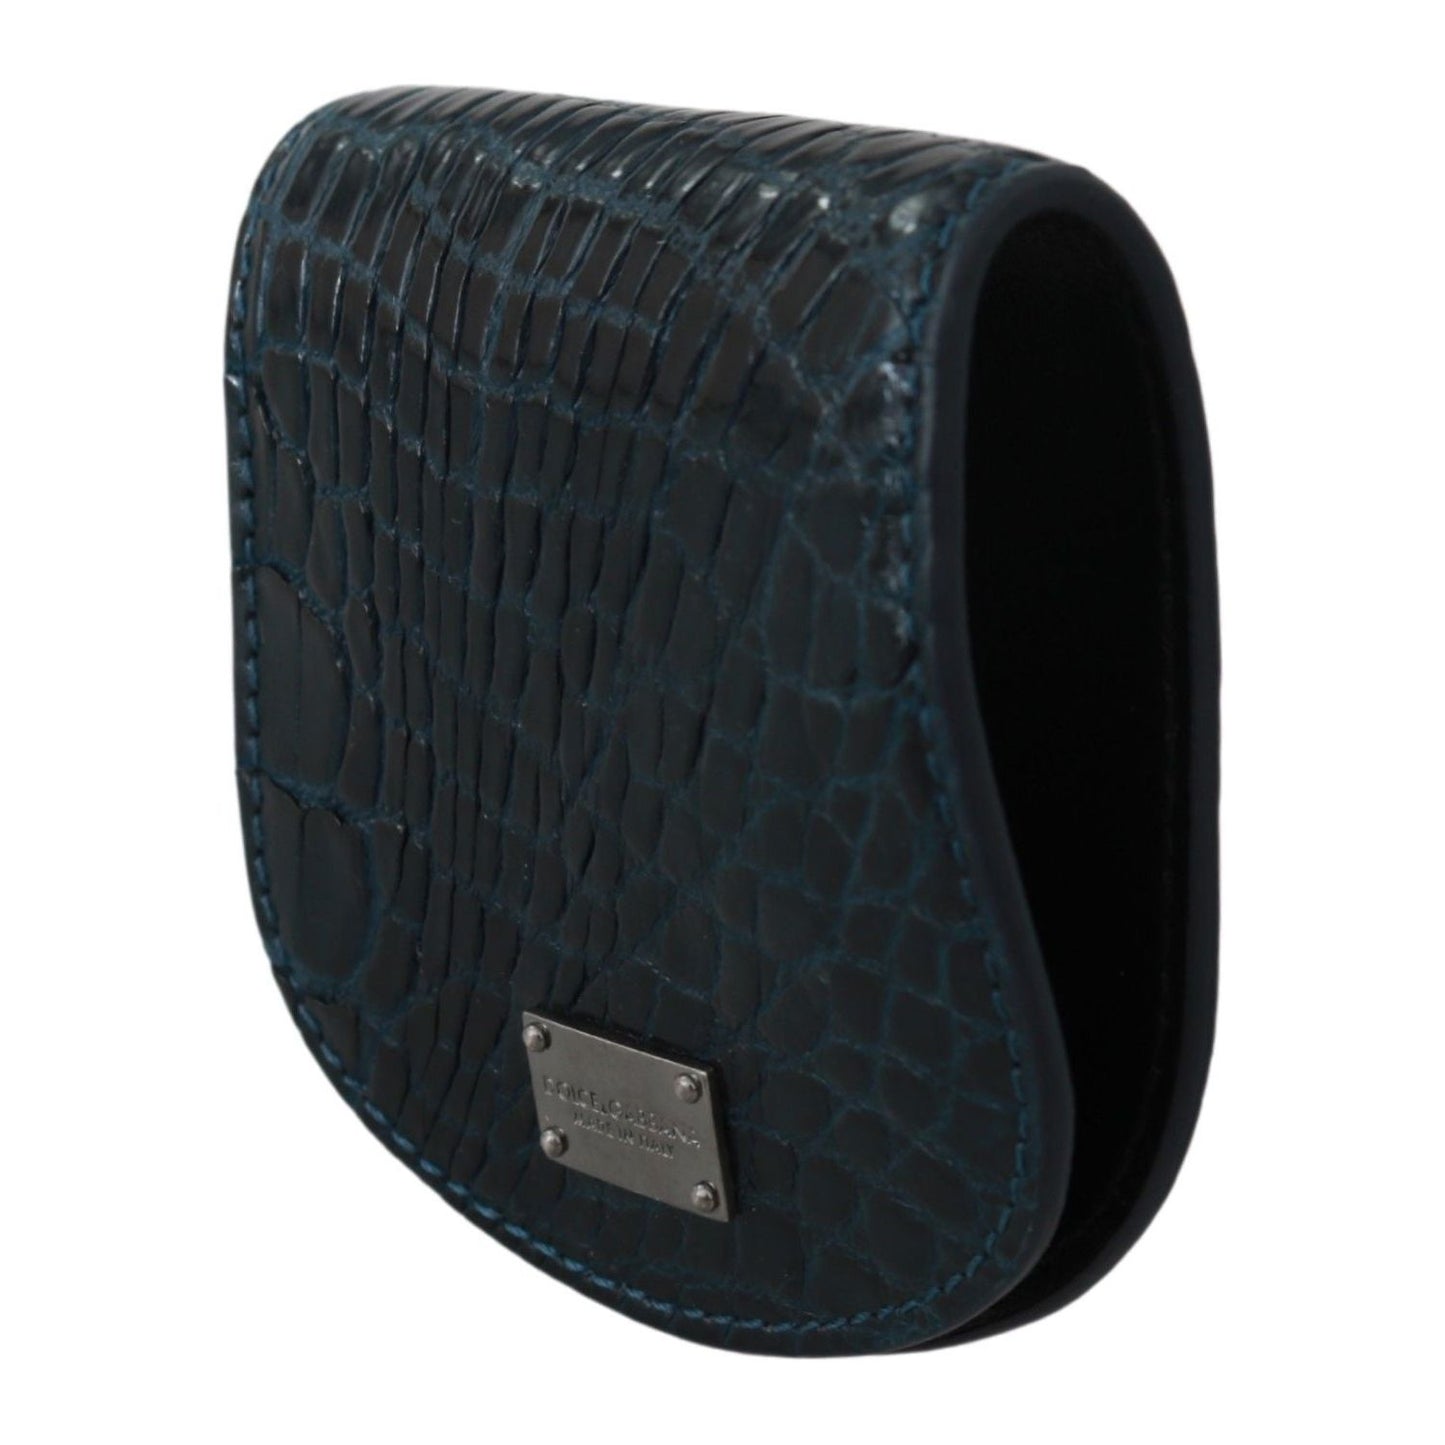 Dolce & Gabbana Exquisite Dark Blue Coin Case Wallet blue-exotic-skins-condom-case-holder-pocket Condom Case IMG_0248-4e861589-7a4.jpg